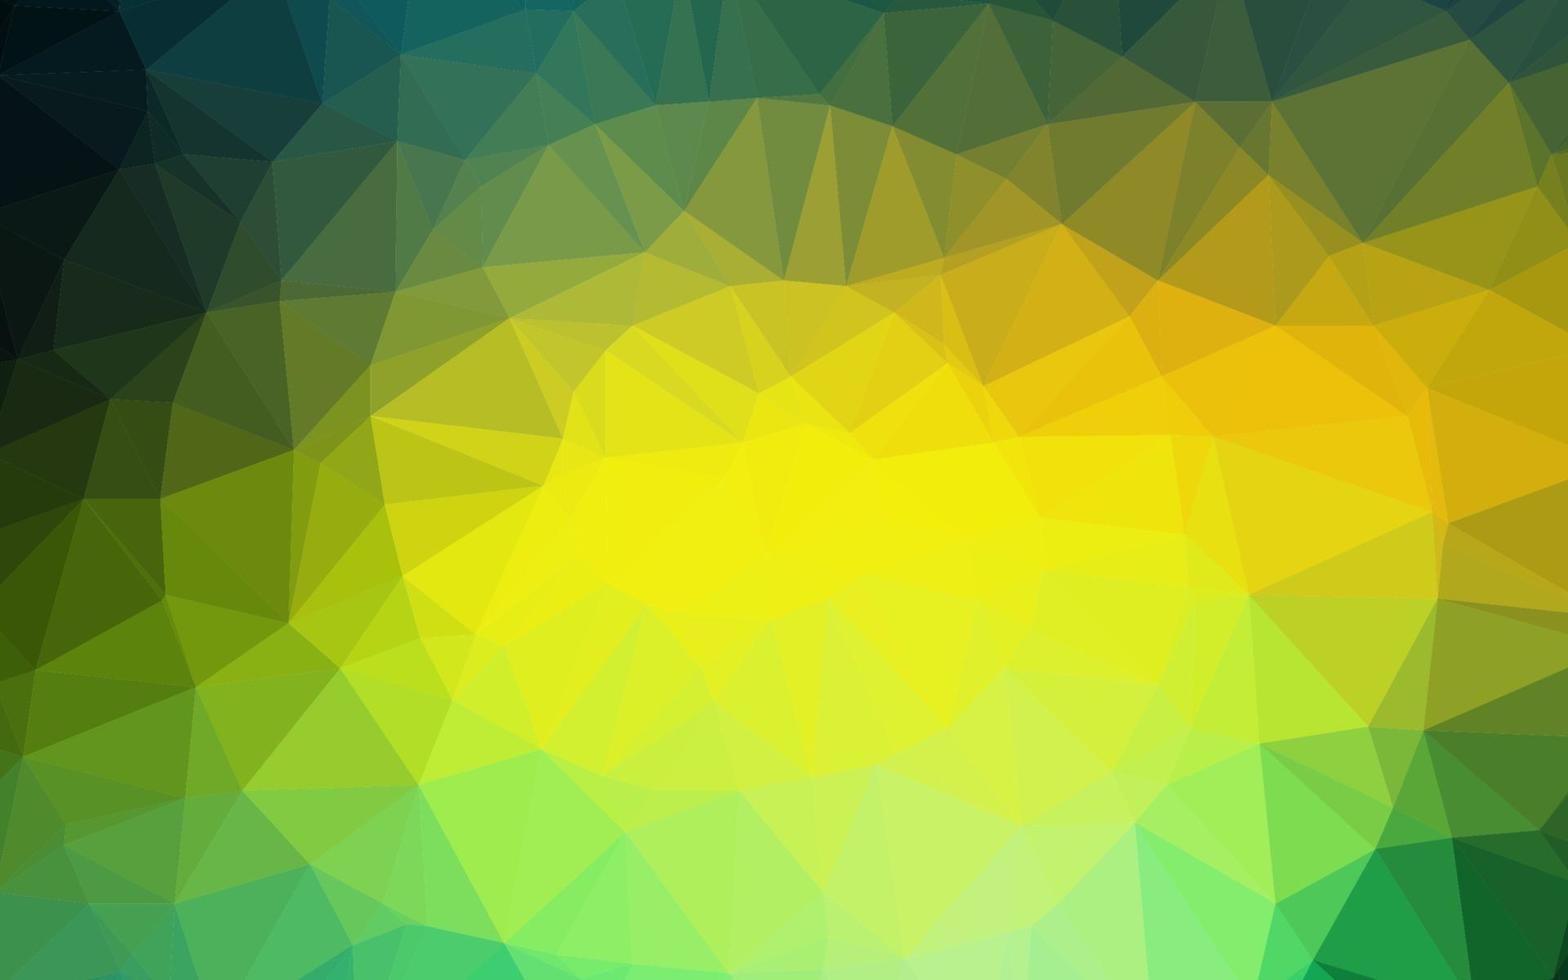 Dark Blue, Yellow vector polygonal background.